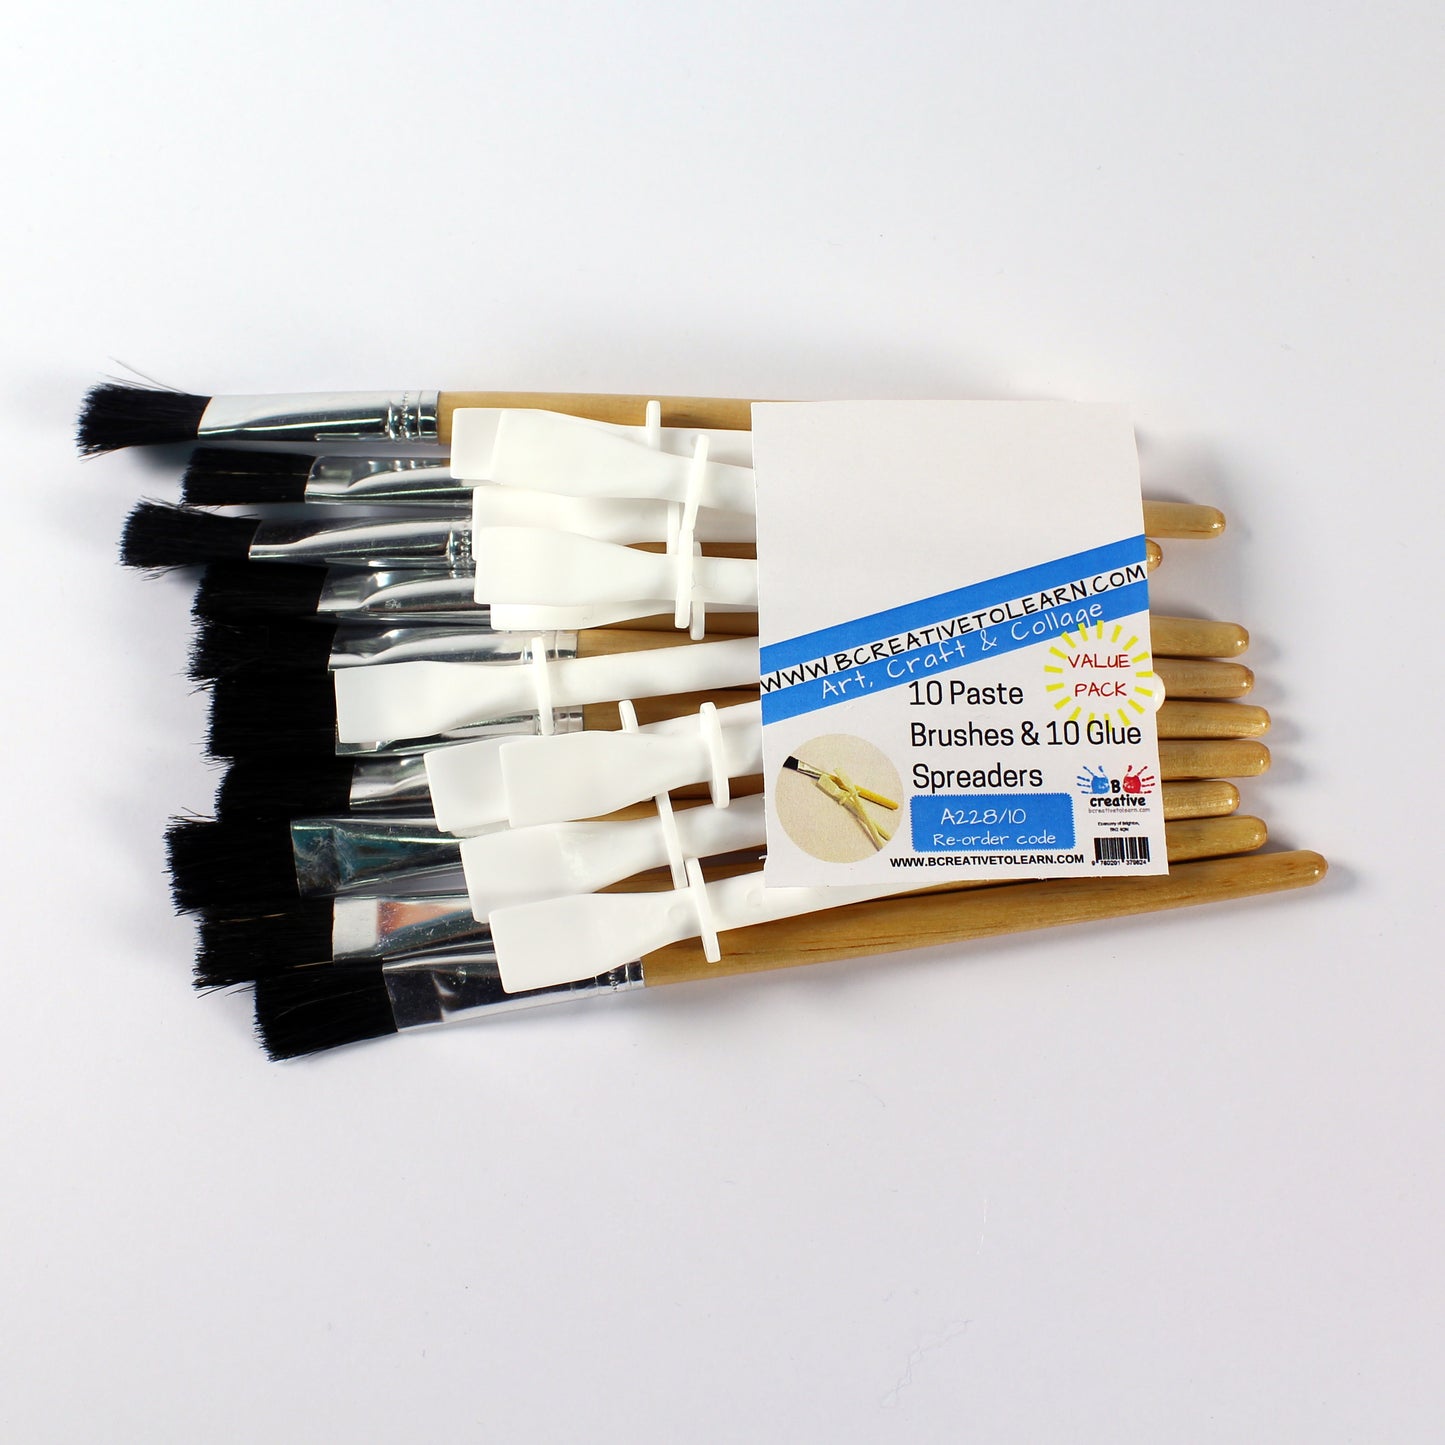 paste brush and glue spreaders